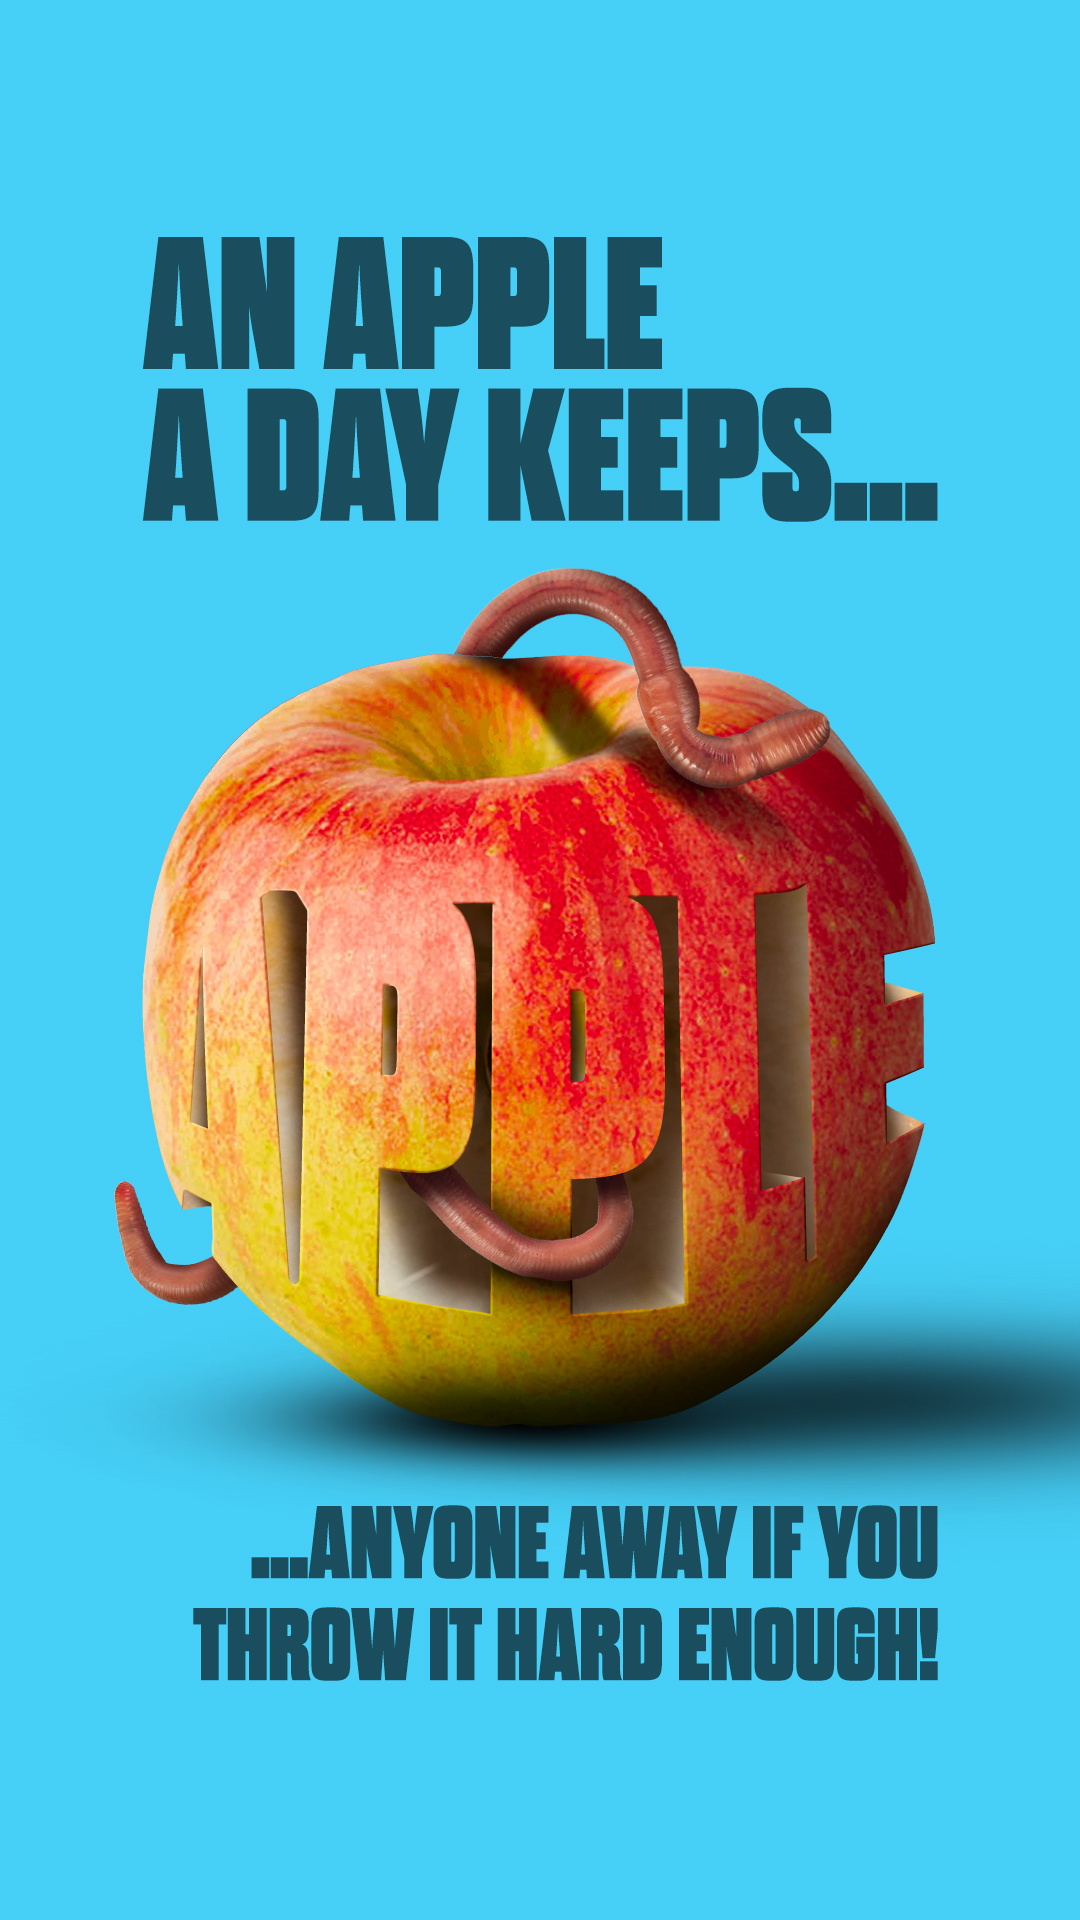 Apple Poster